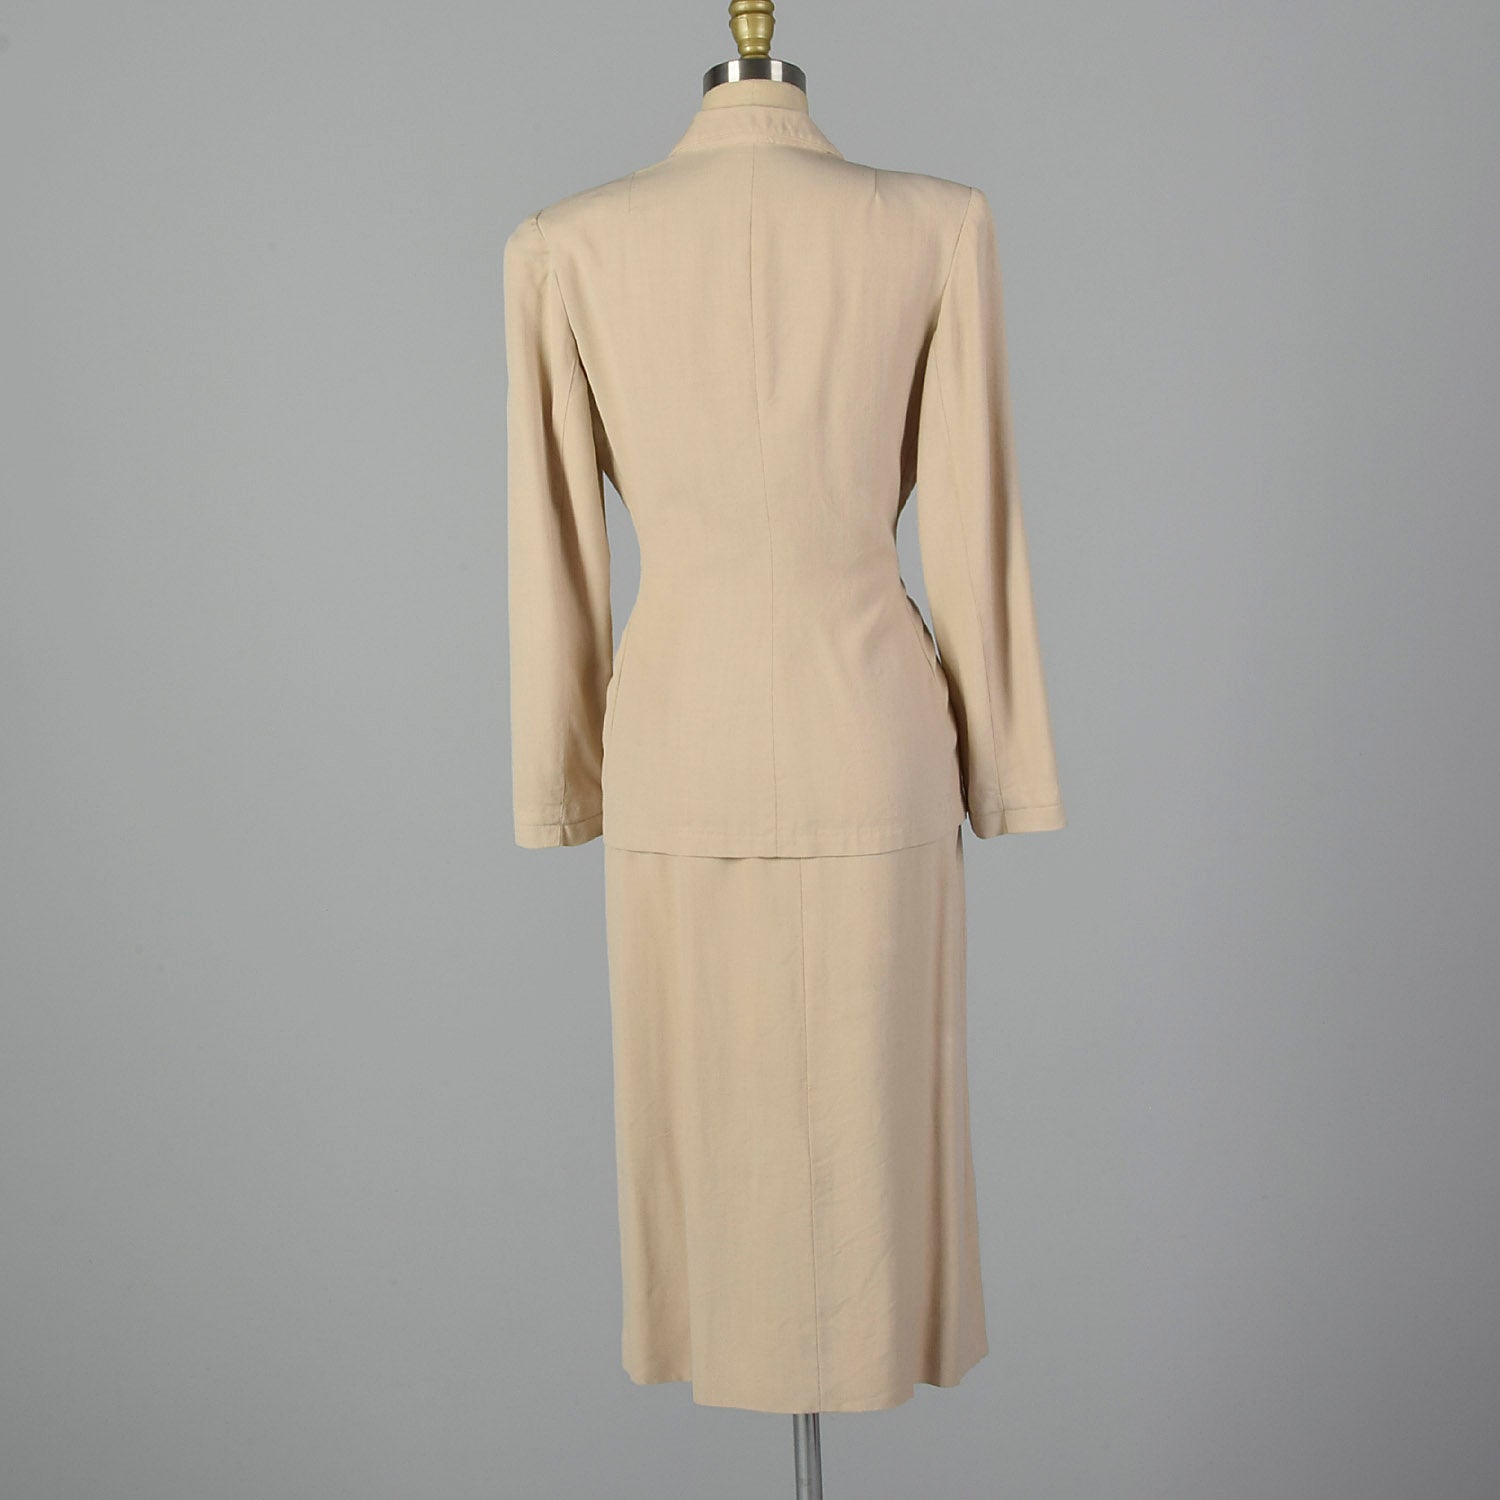 1950s Sacony Tan Summer Skirt Suit